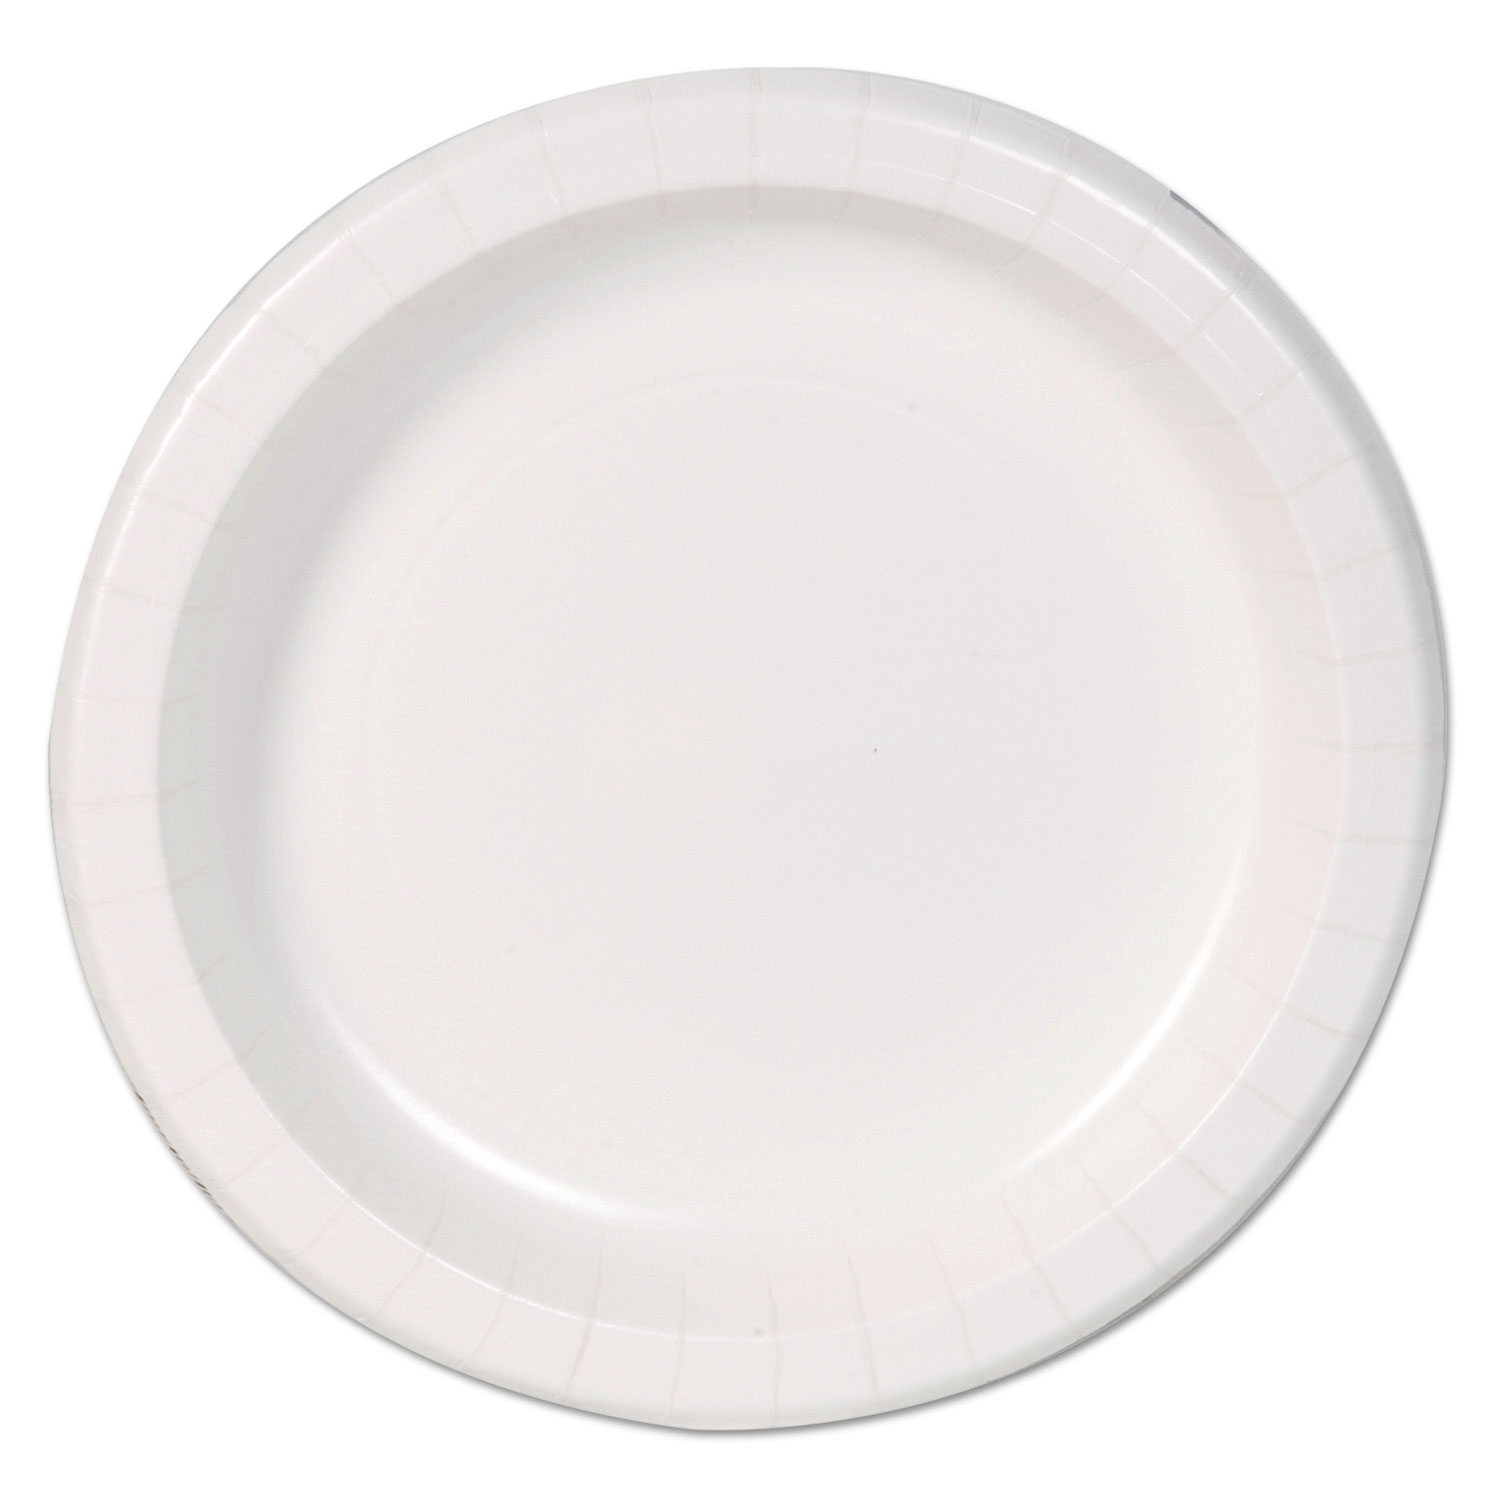  Dixie Basic DBP09W Basic Paper Dinnerware, Plates, White, 8.5 Diameter, 125/Pack (DXEDBP09W) 